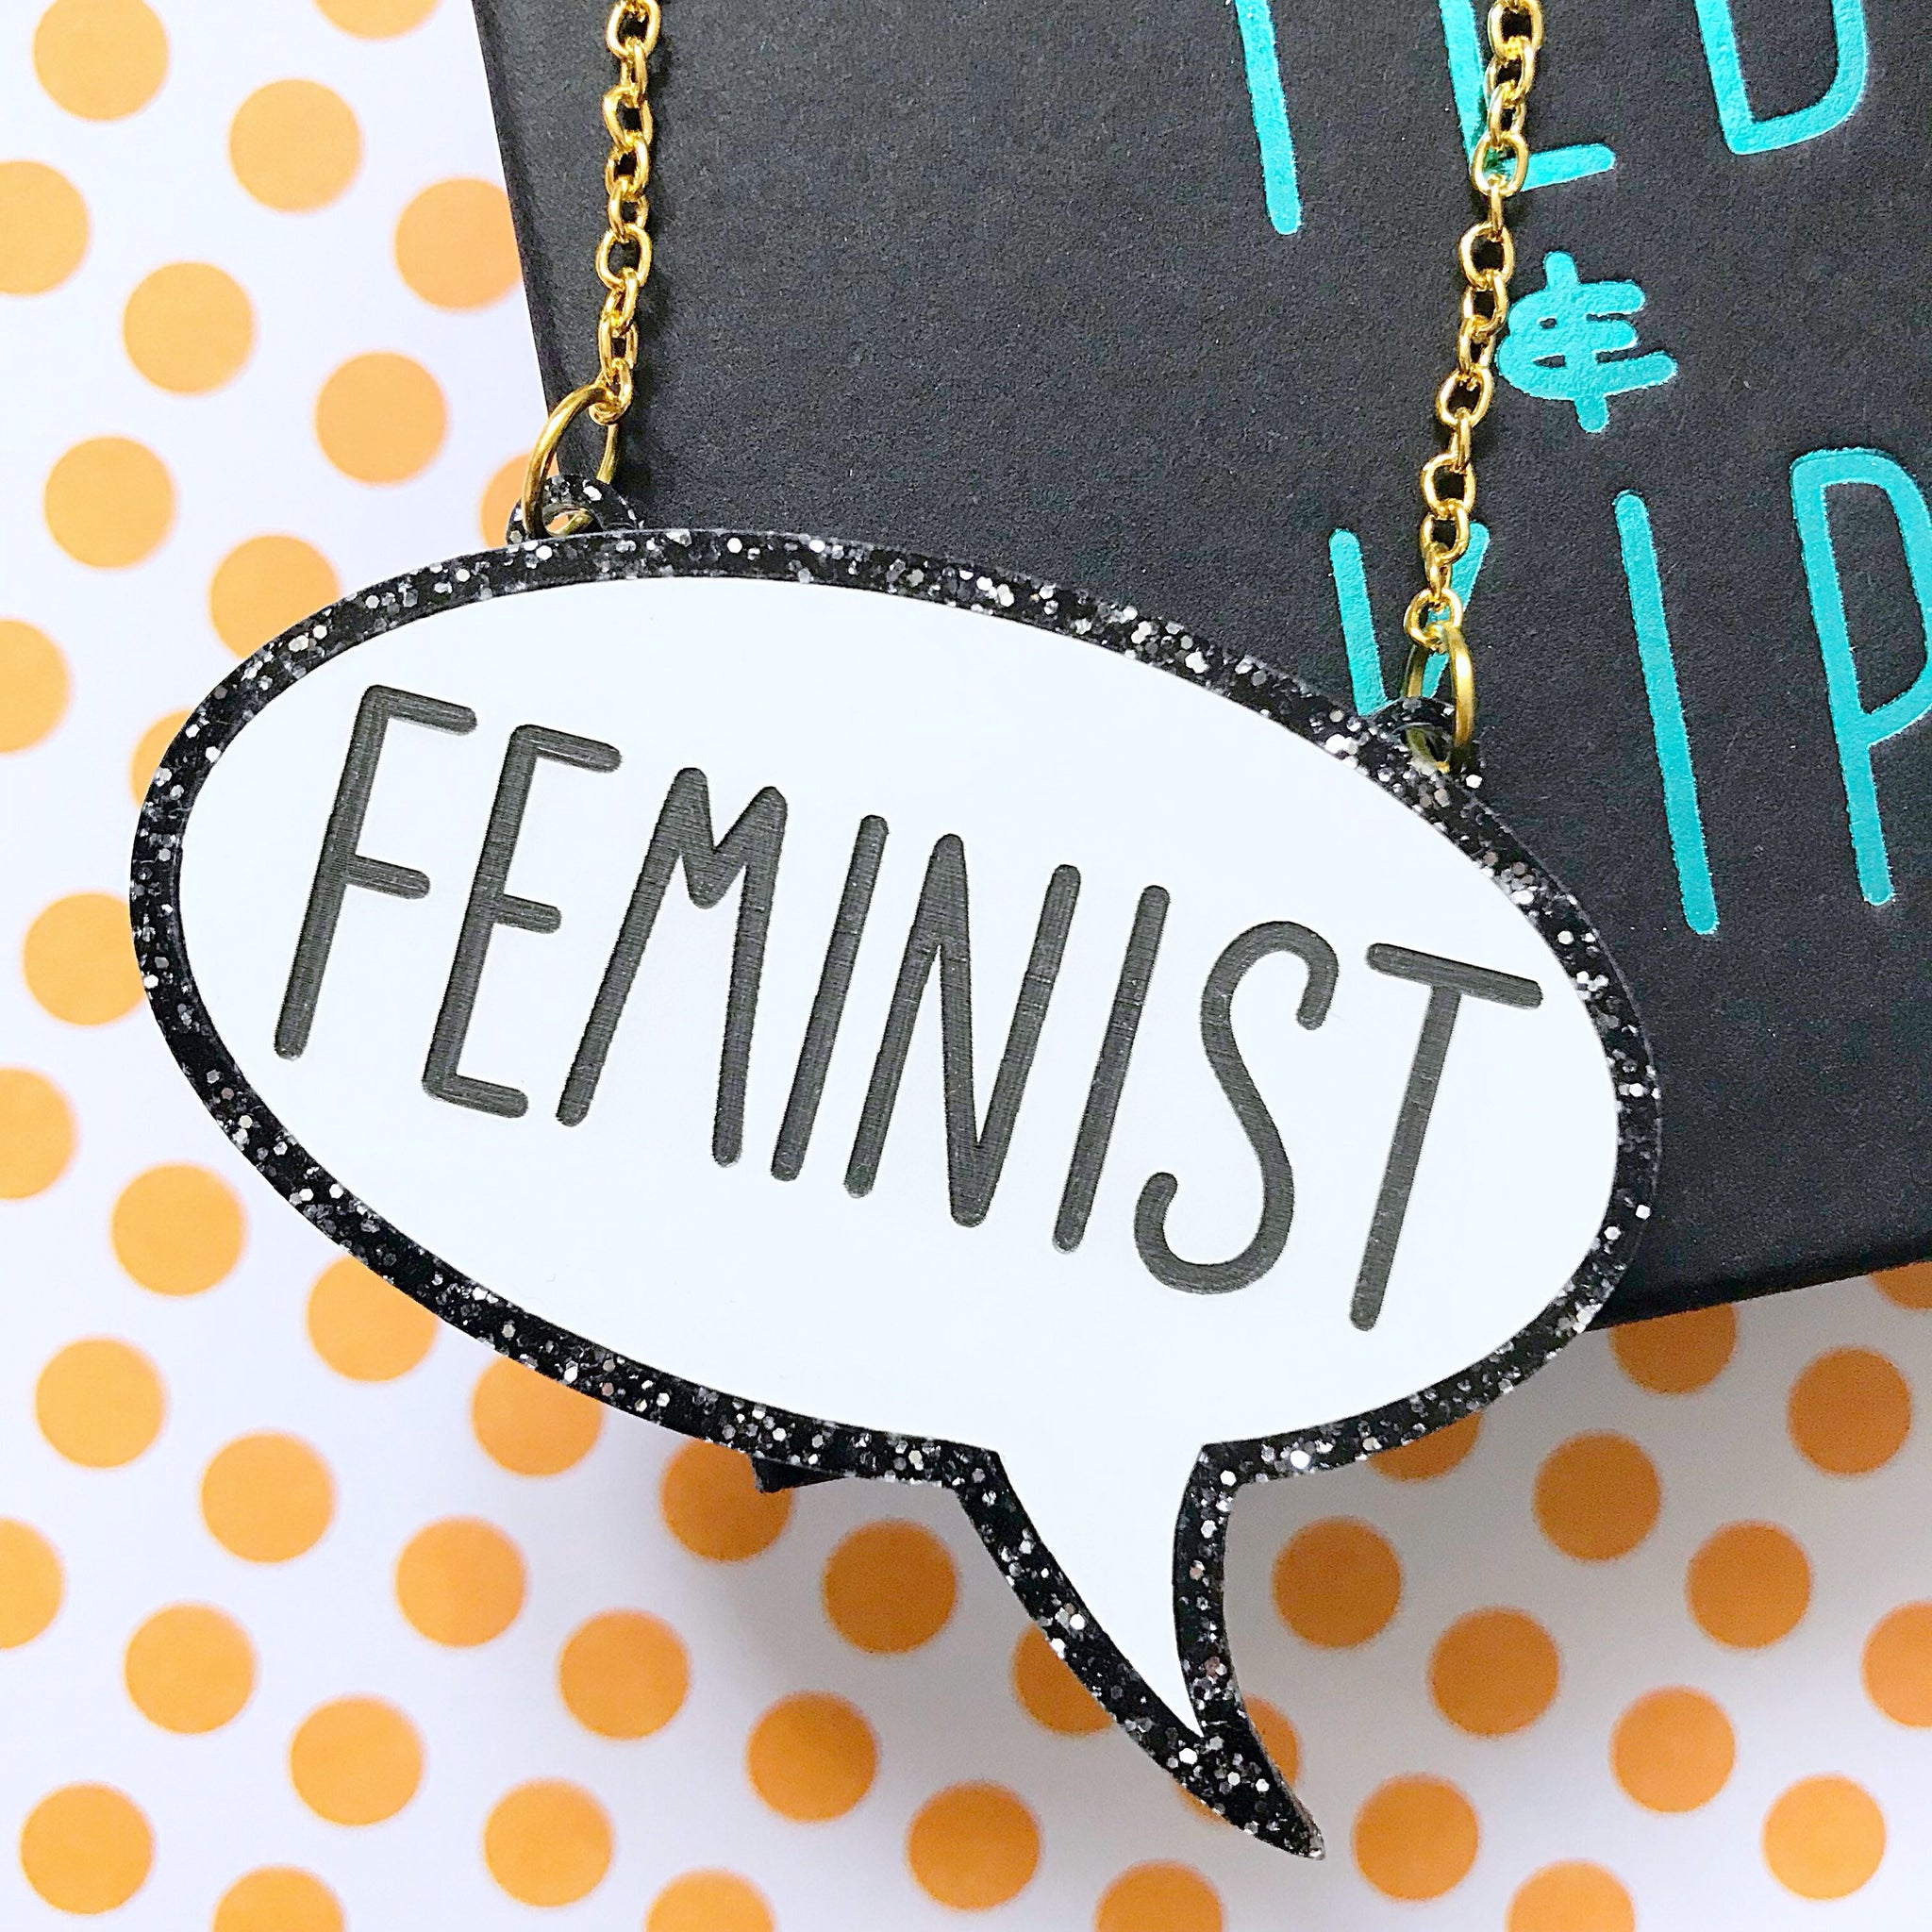 SALE Feminist Acrylic Necklace